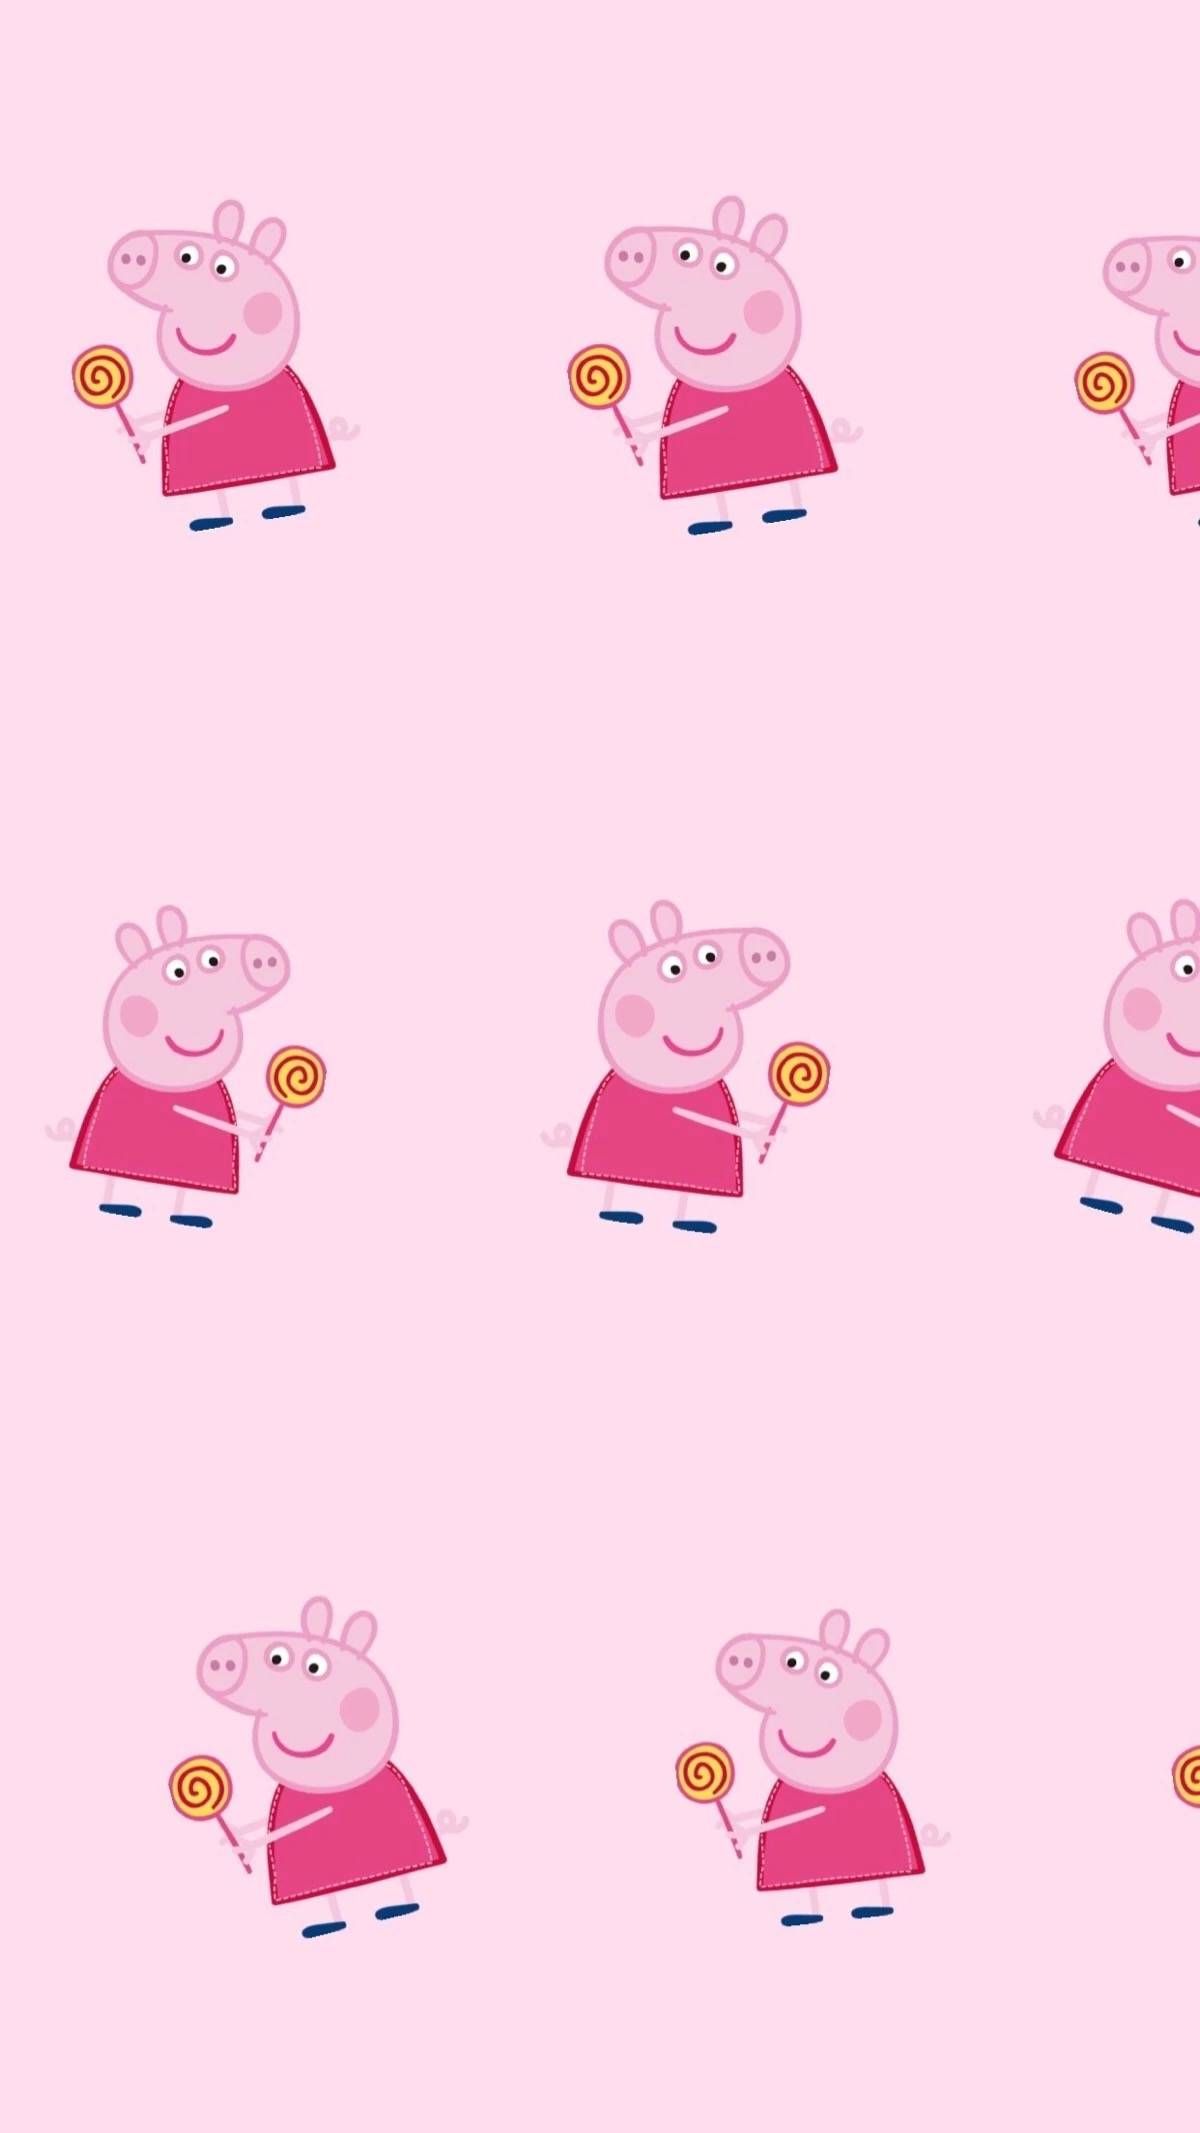 Peppa pig house wallpaper iphone